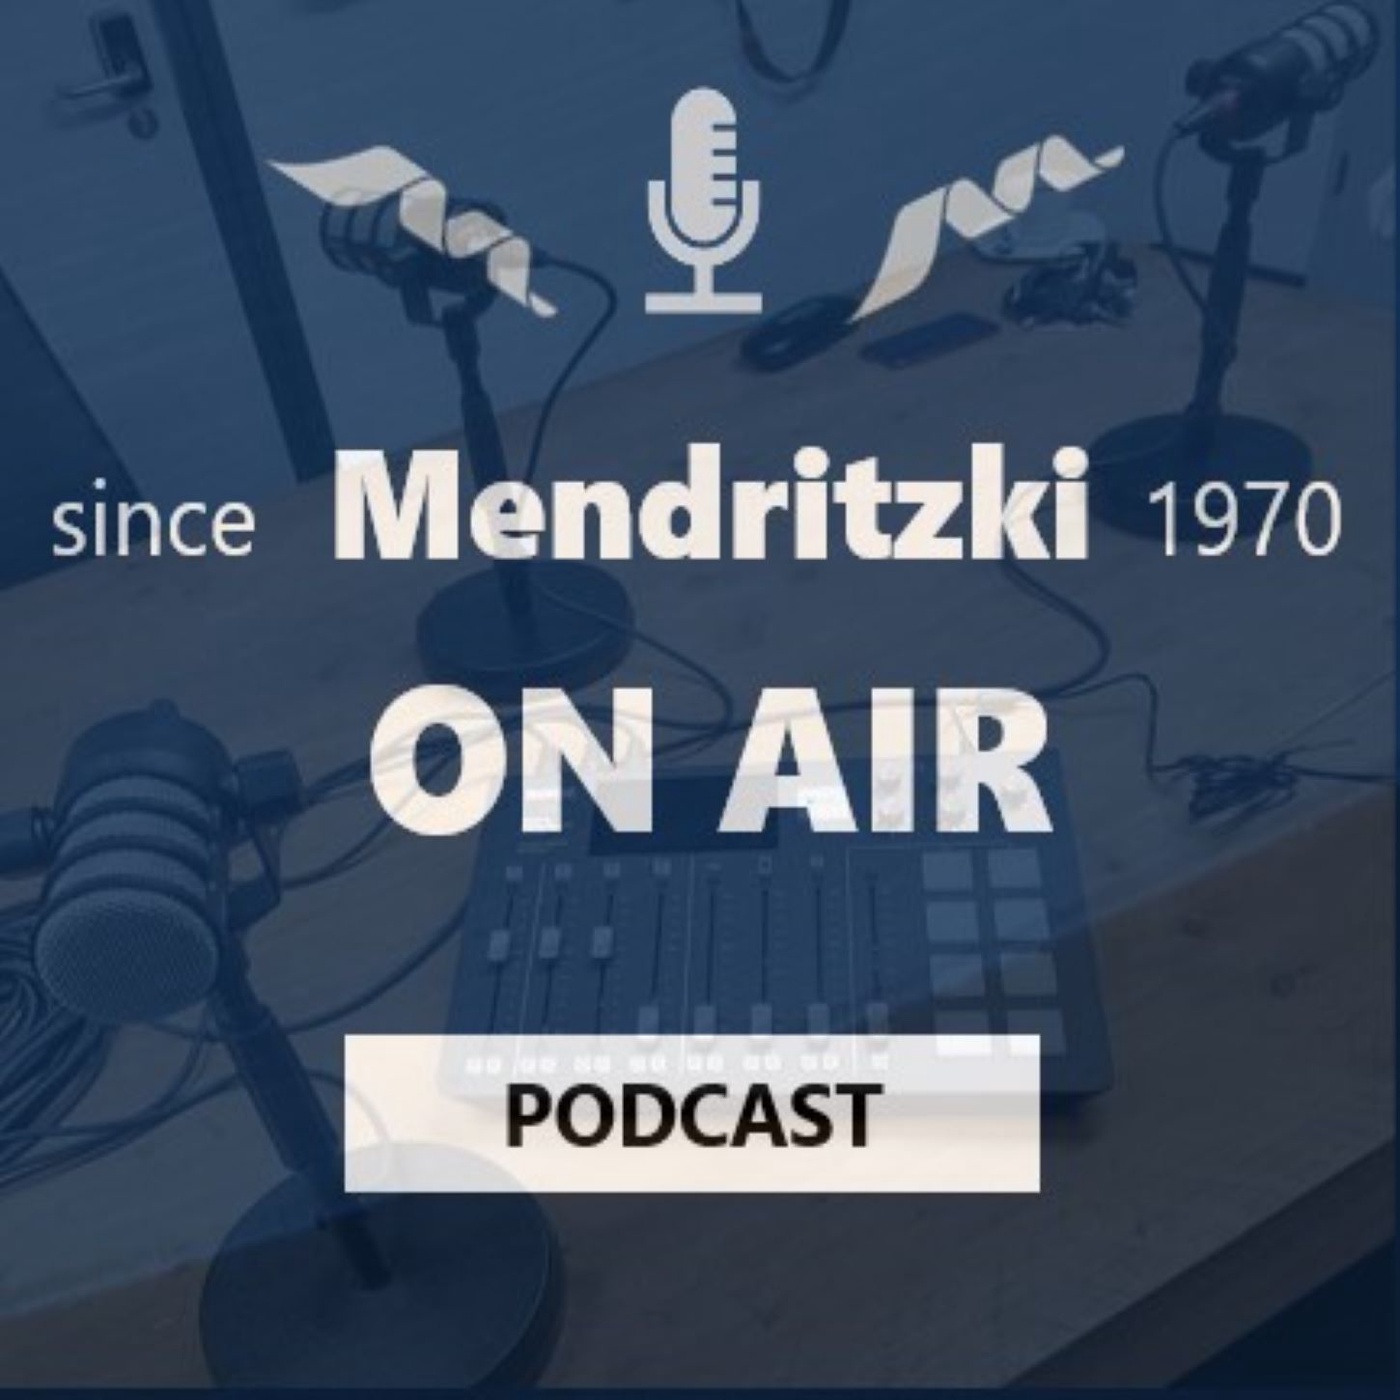 Mendritzki ON AIR